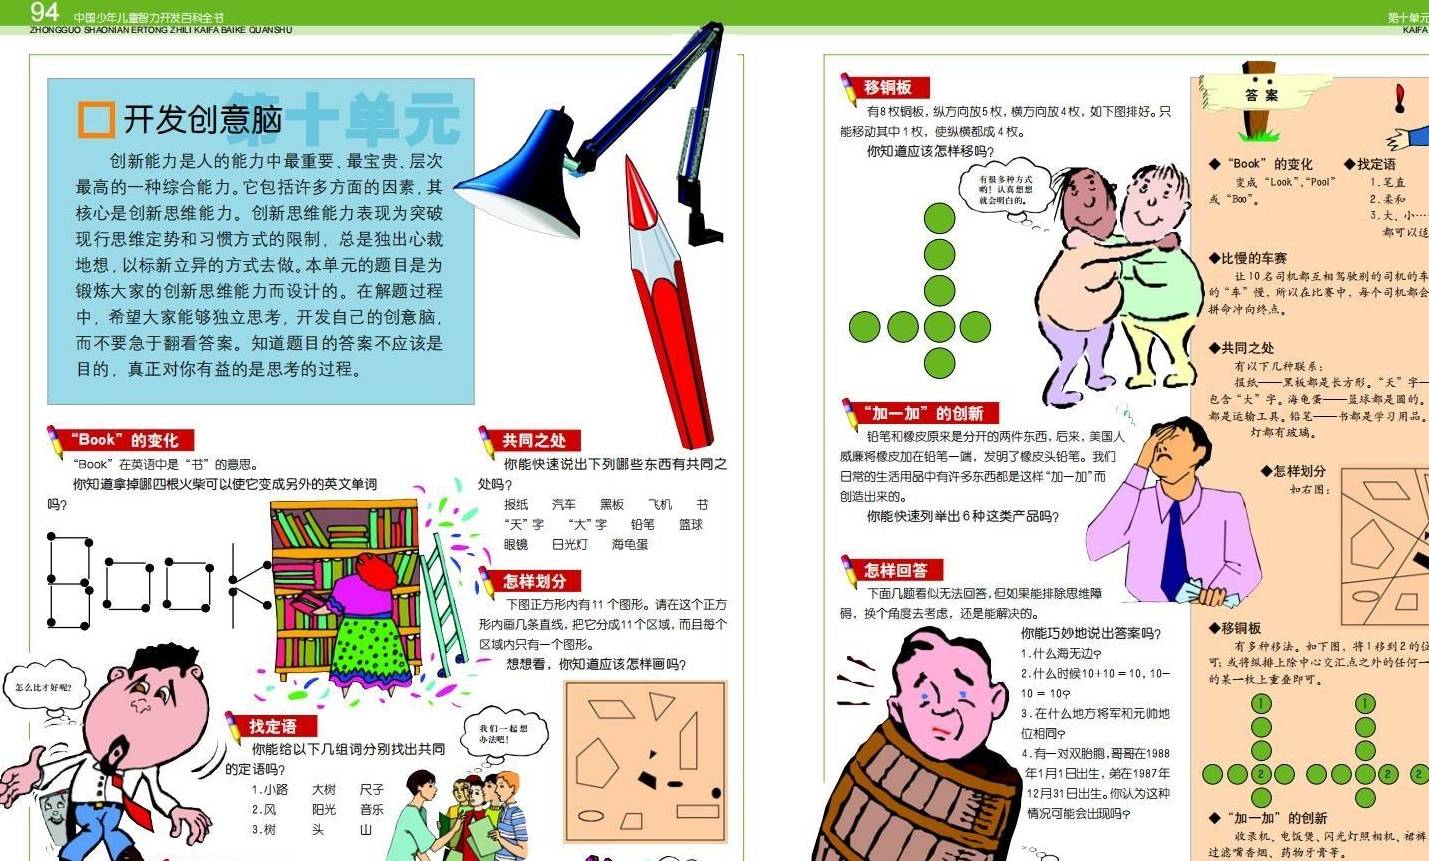 ps苹果版如何拼图:推荐一本宝藏书籍：中国少年儿童智力开发百科全书-第50张图片-太平洋在线下载